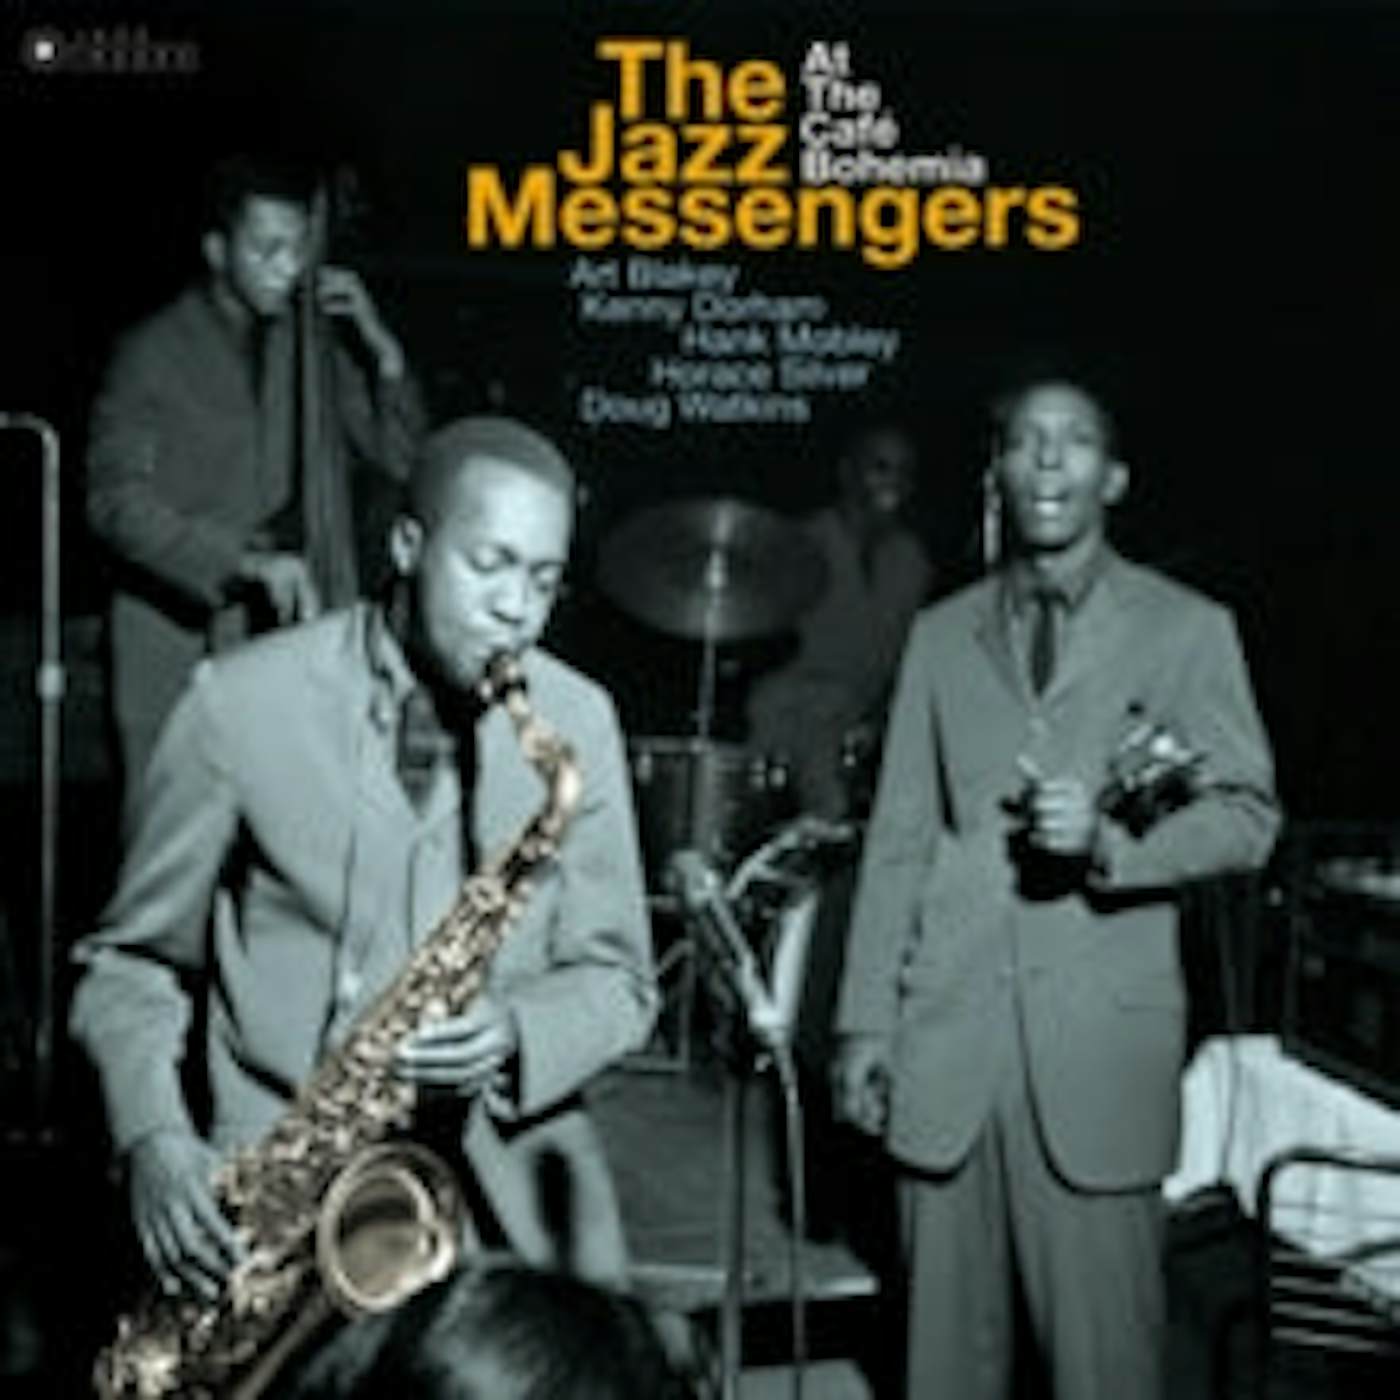 Art Blakey & The Jazz Messengers LP Vinyl Record - The Jazz Messengers At Cafe Bohemia